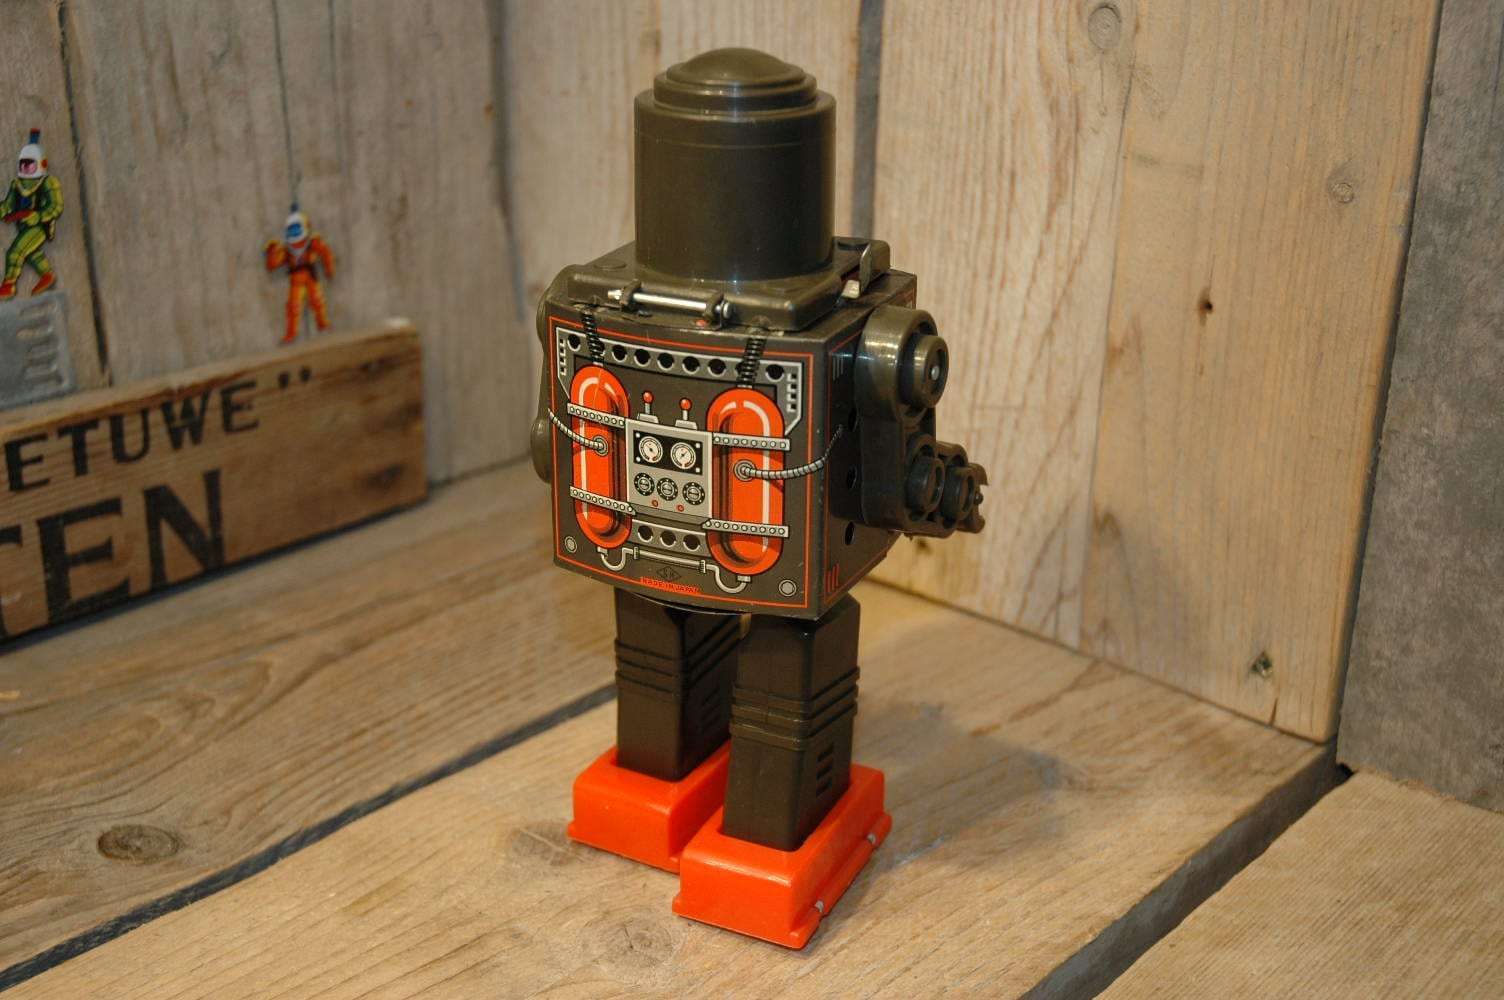 Horikawa - Roto Robot